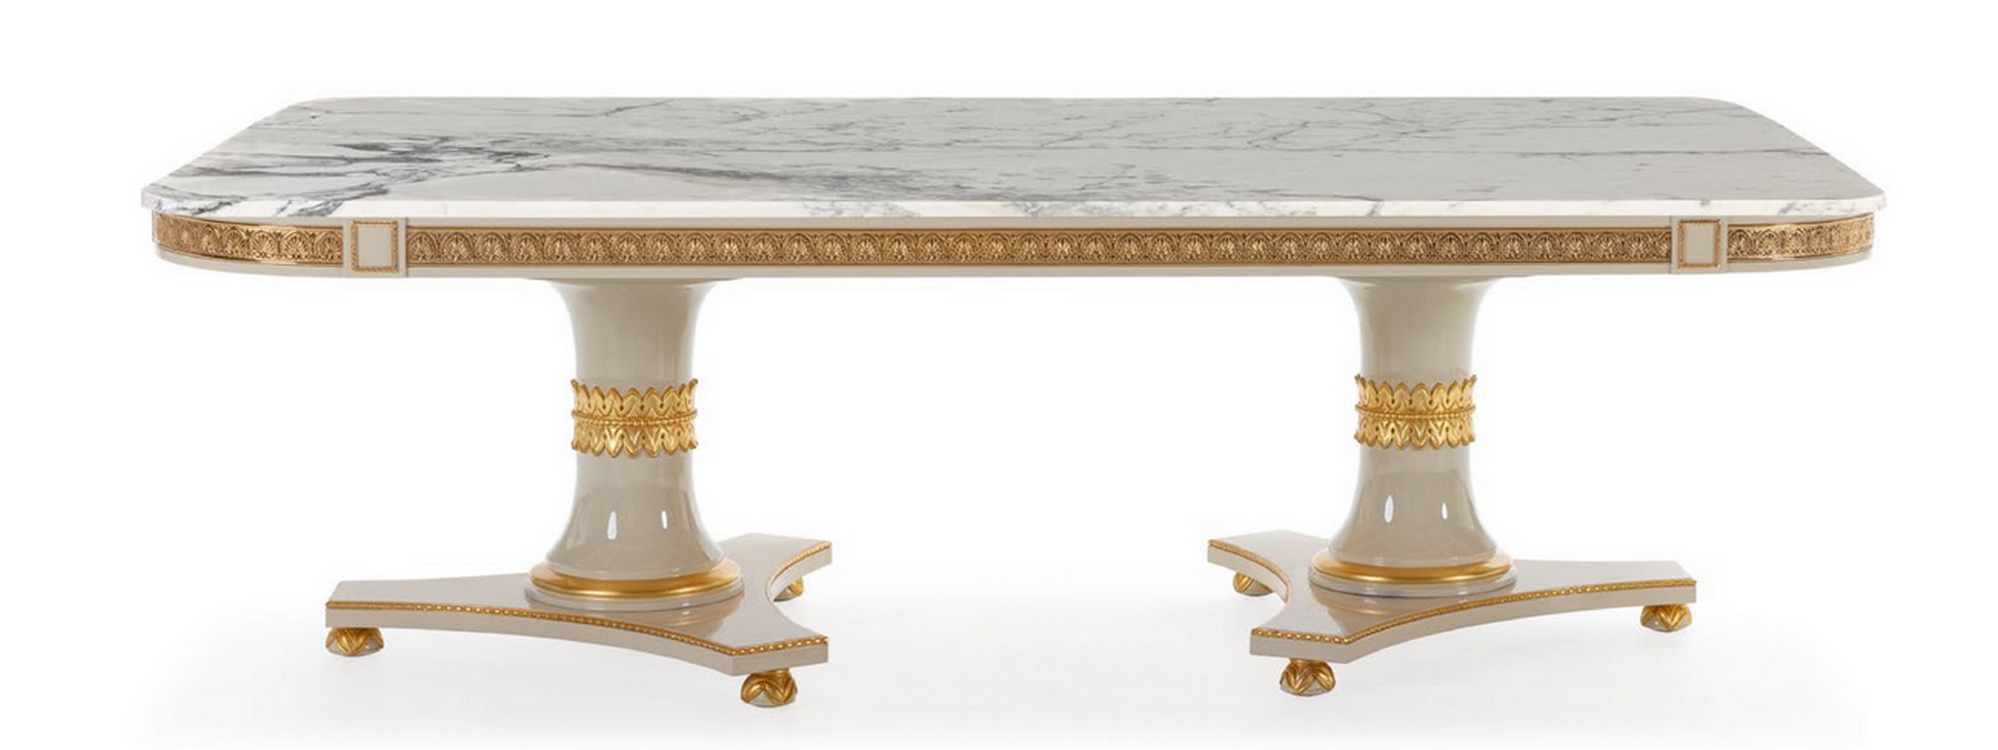 Table de repas baroque de luxe